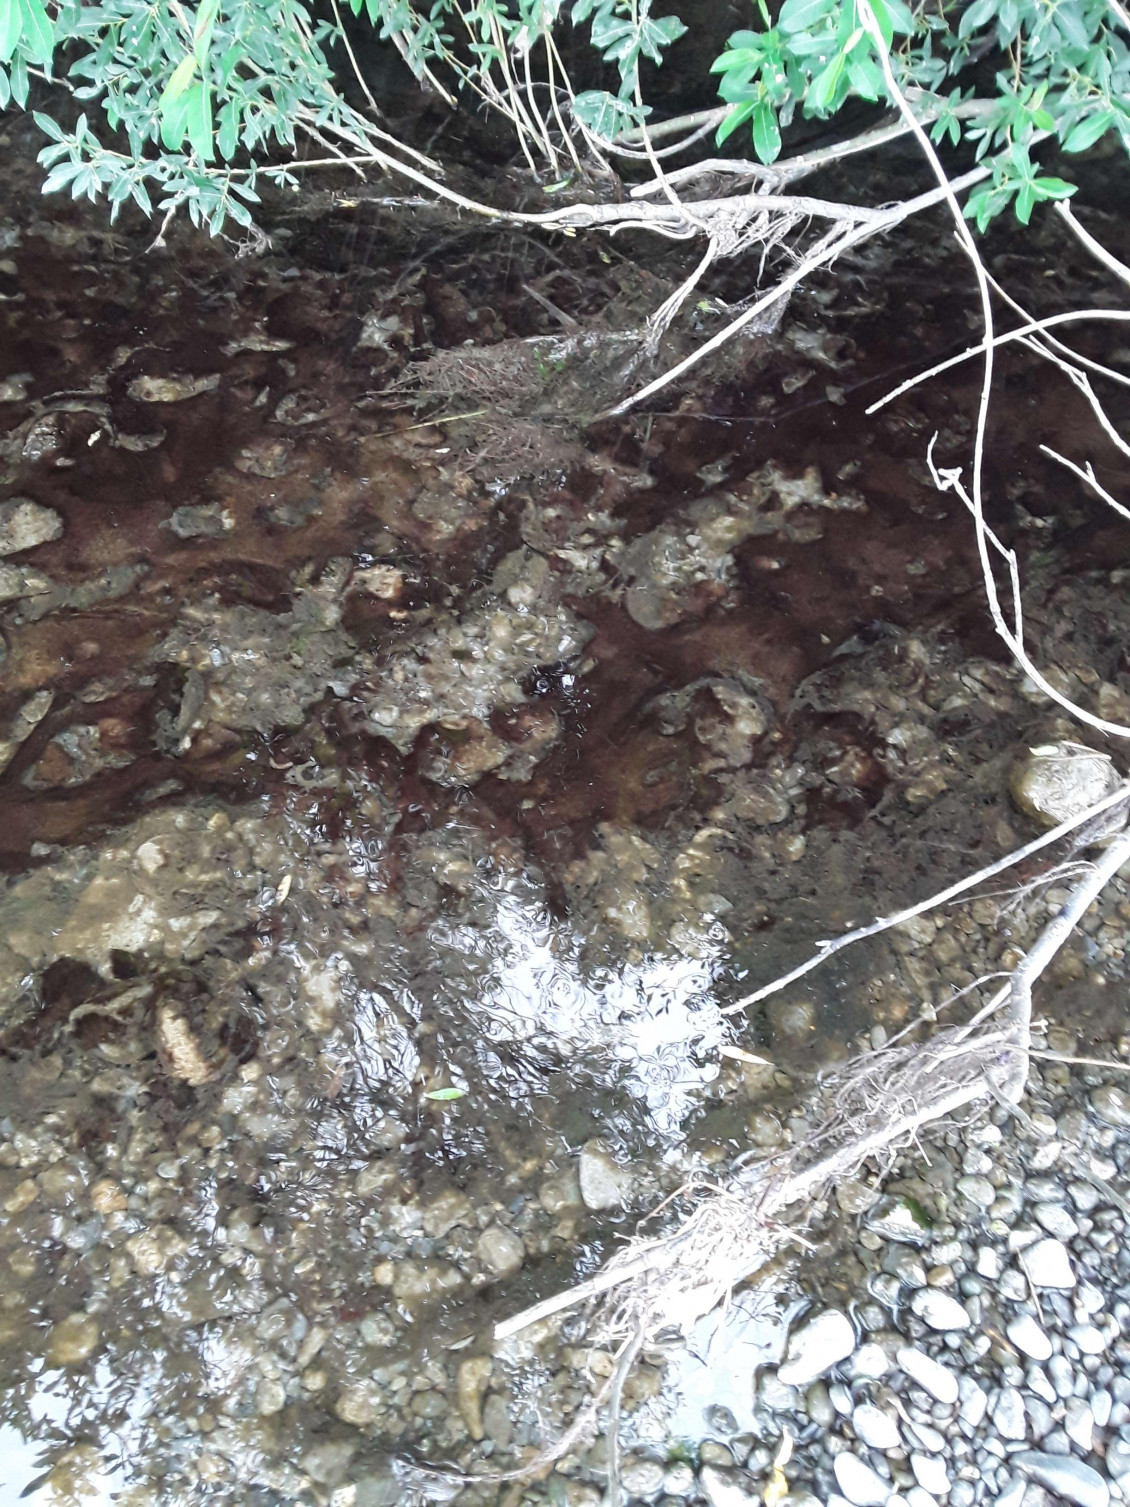 Toxic algae in the Otaki River at State Highway One